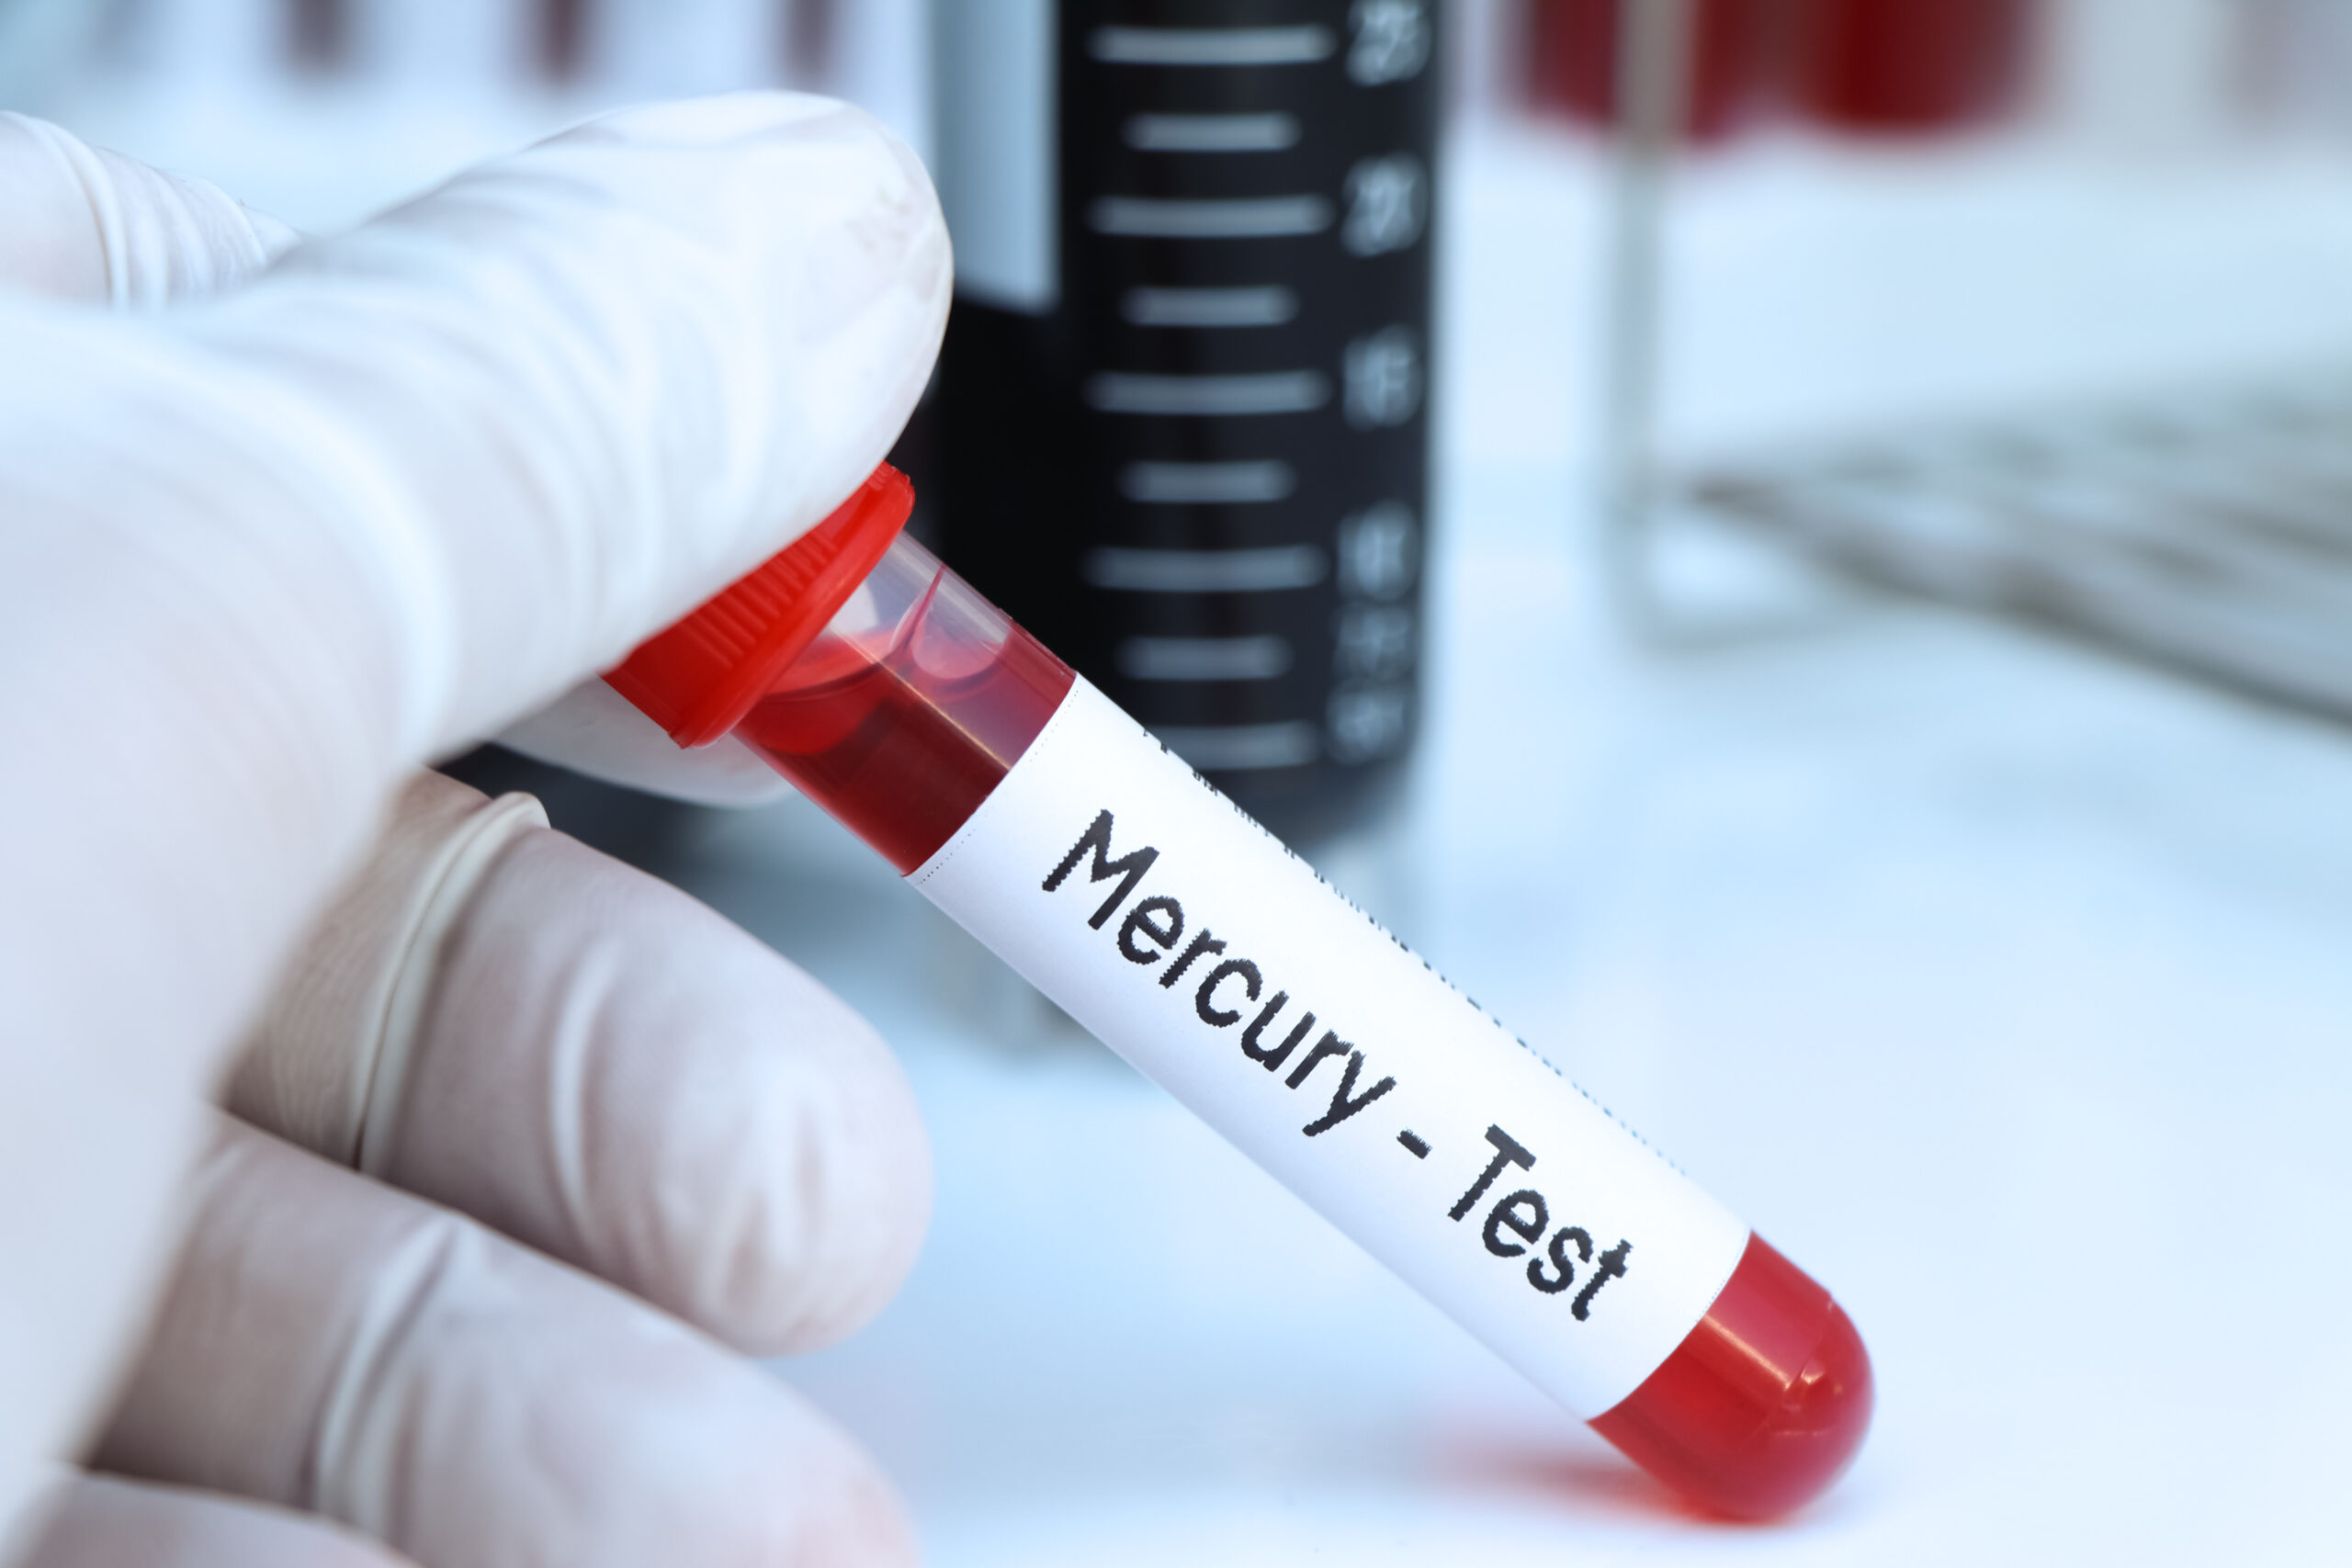 Mercury blood test